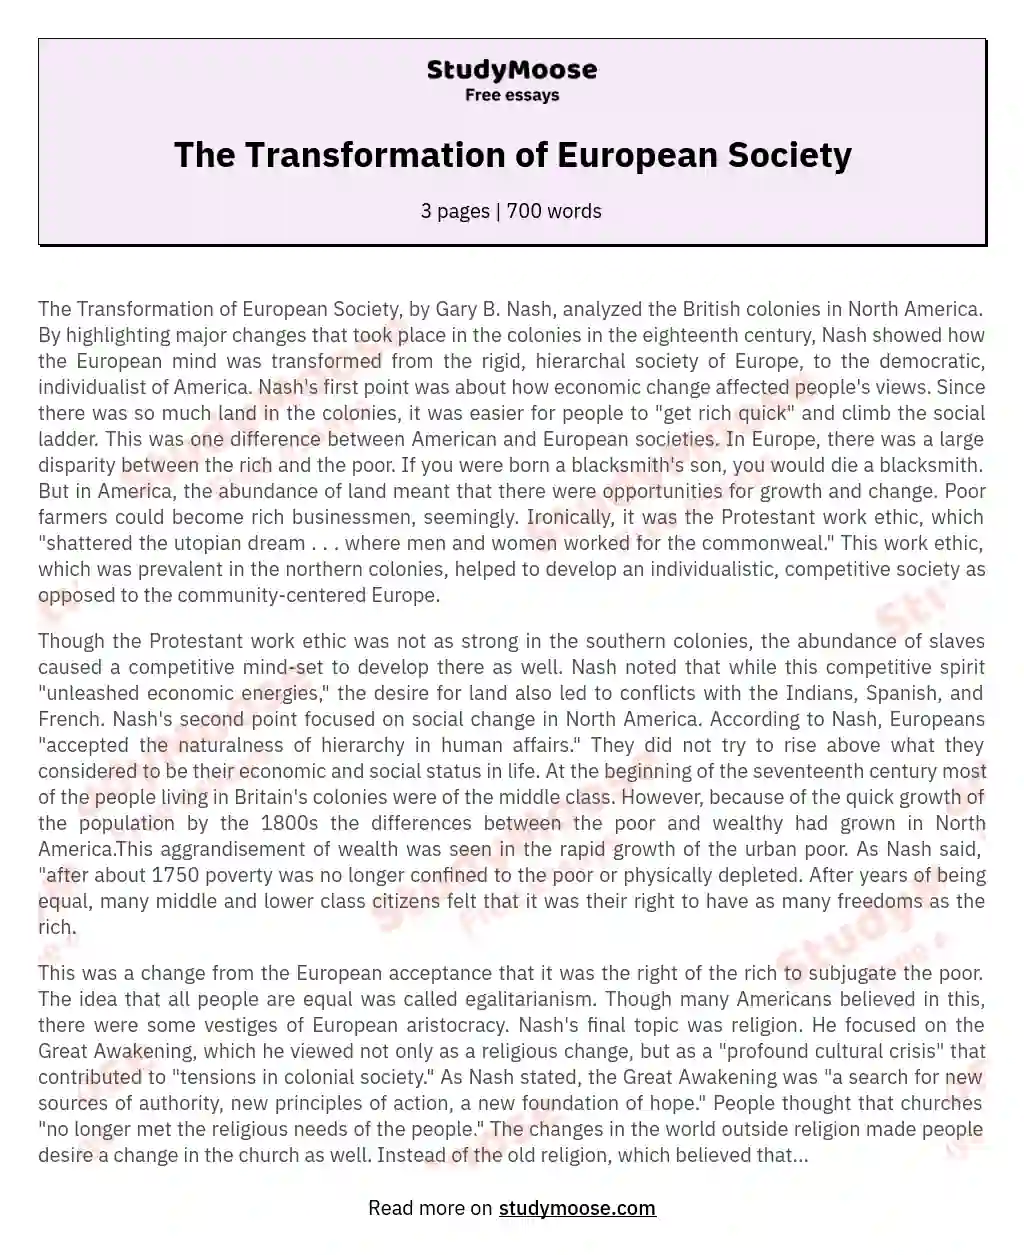 The Transformation of European Society essay